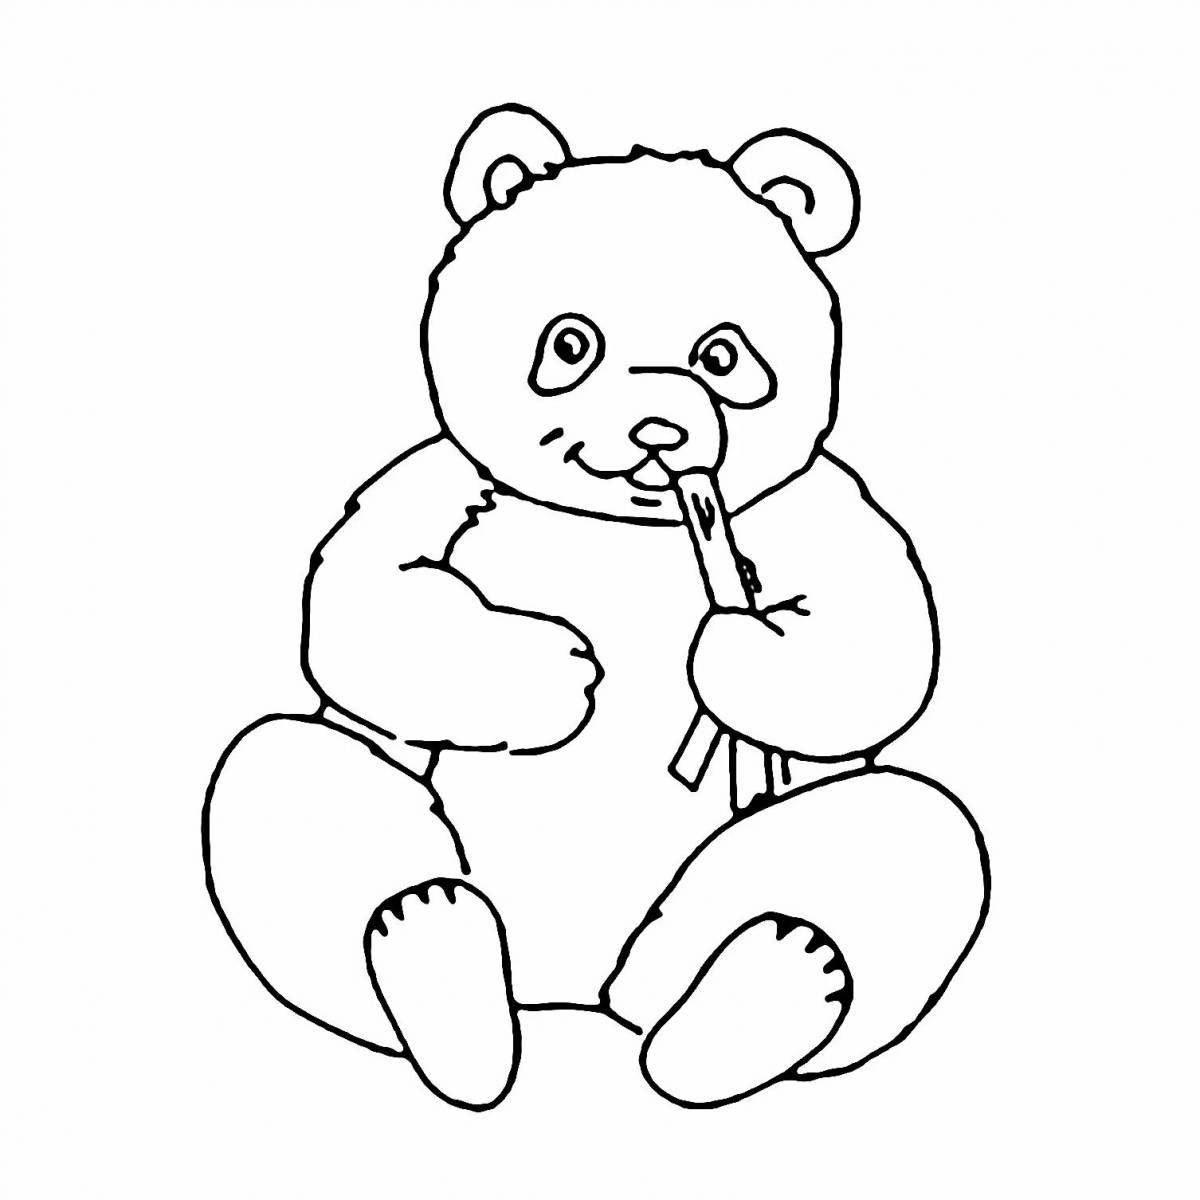 Naughty little panda coloring book